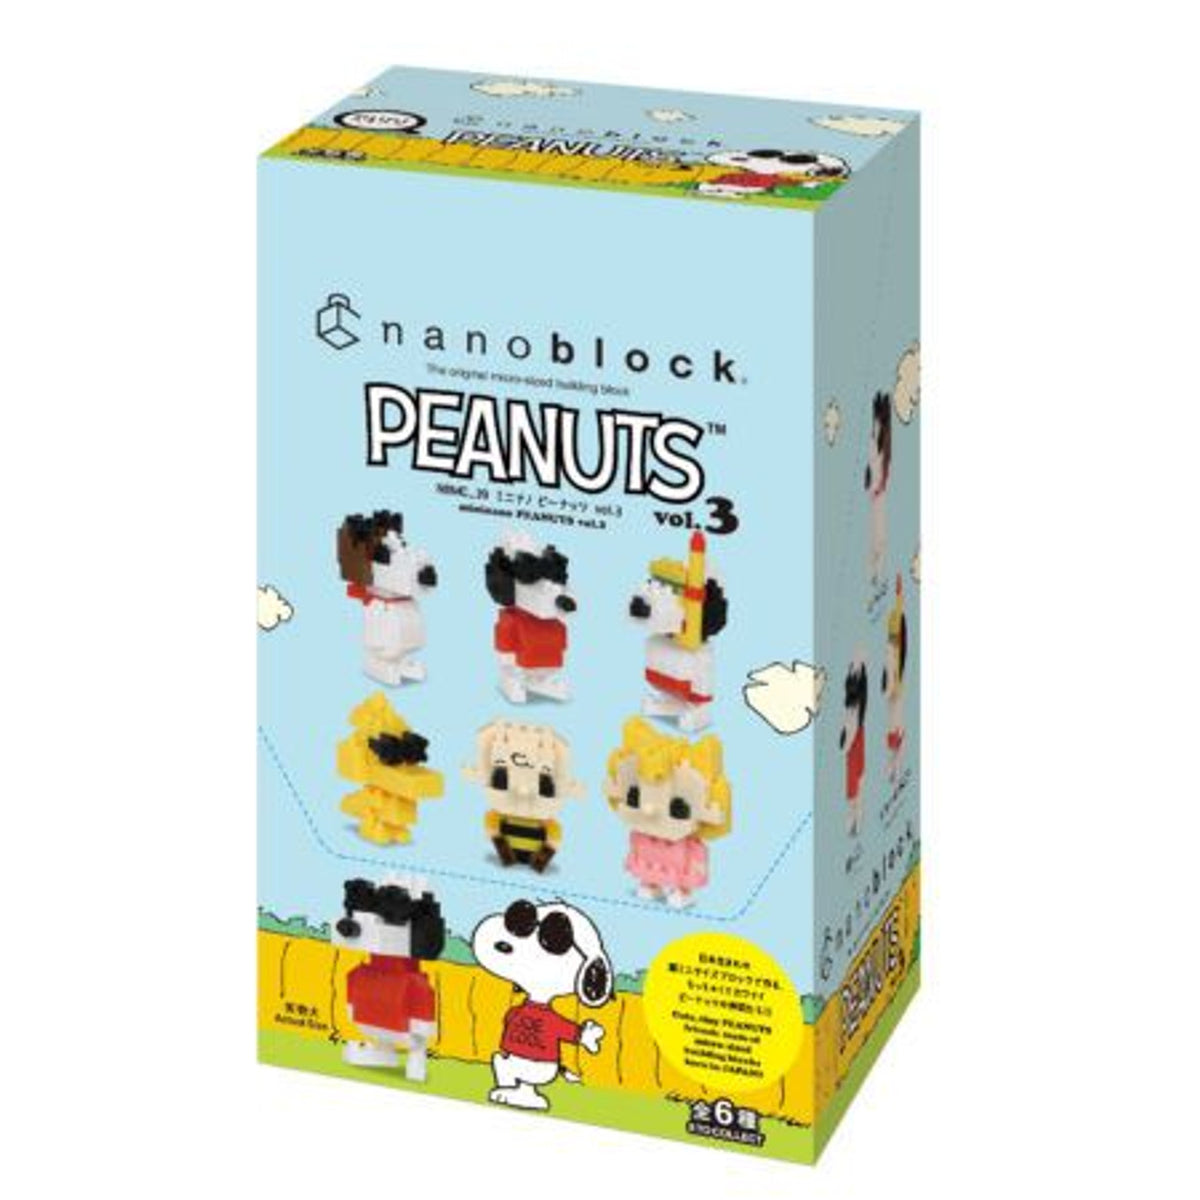 Nanoblocks - Mininano Peanuts Vol. 3 - Blind Box